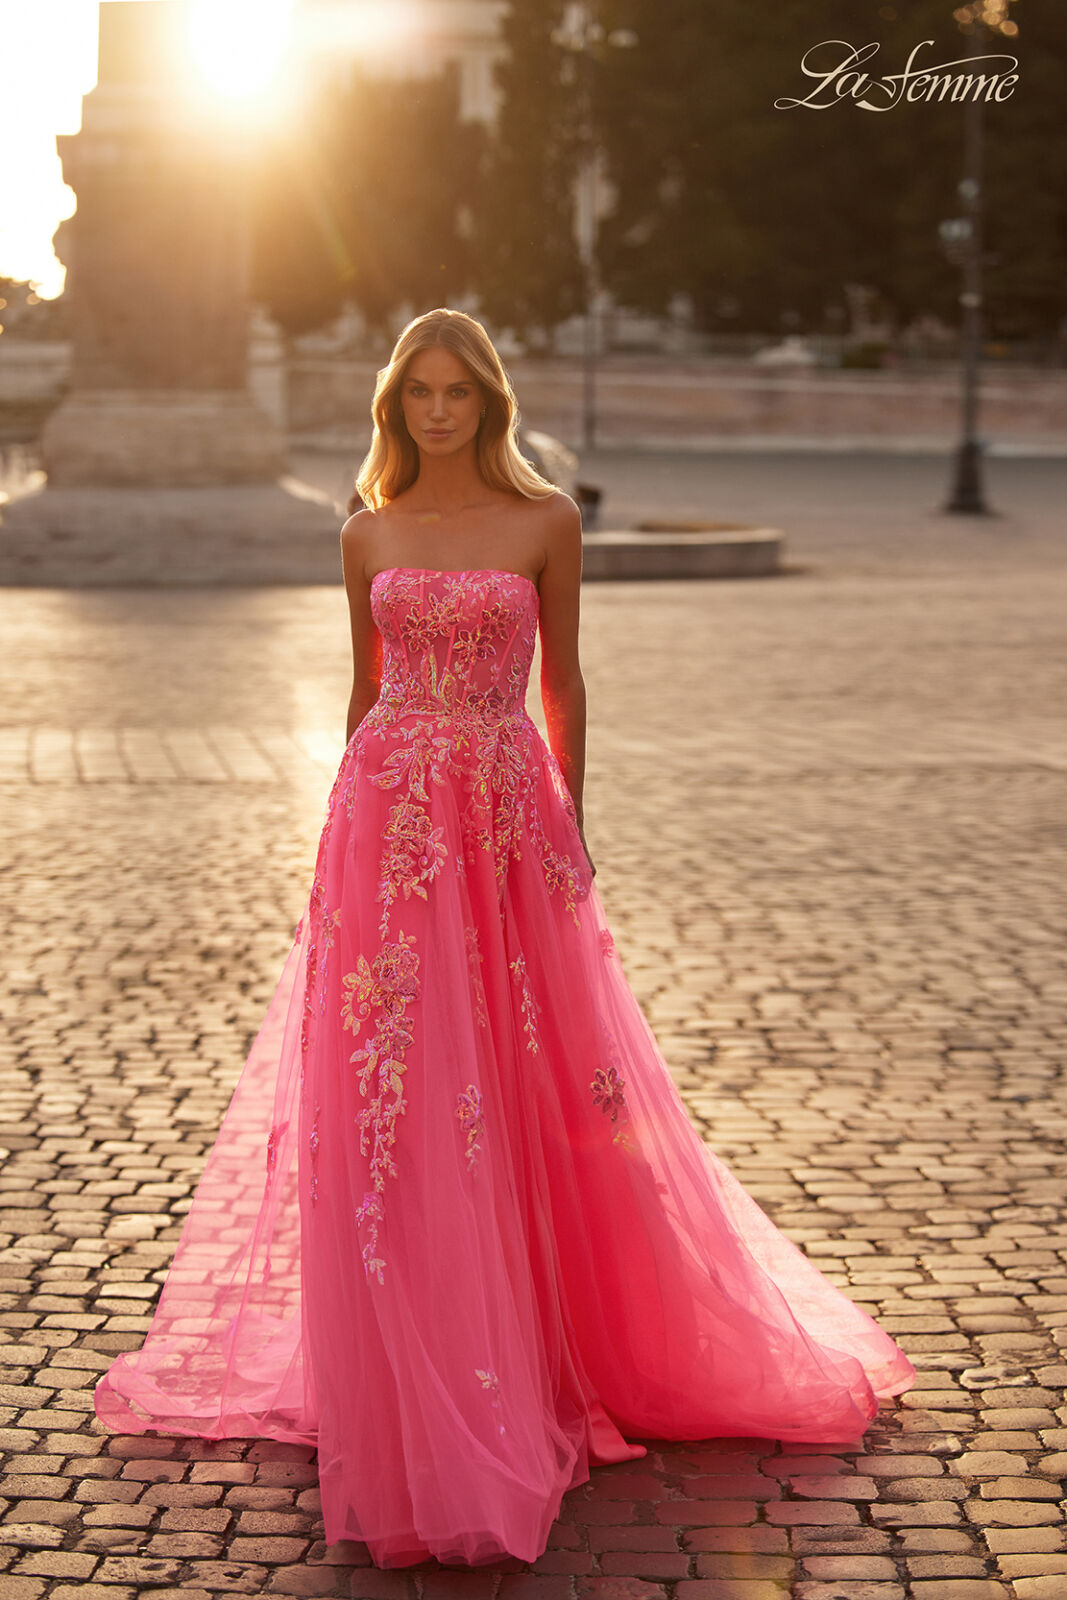 neon-pink-prom-dress-1-32137